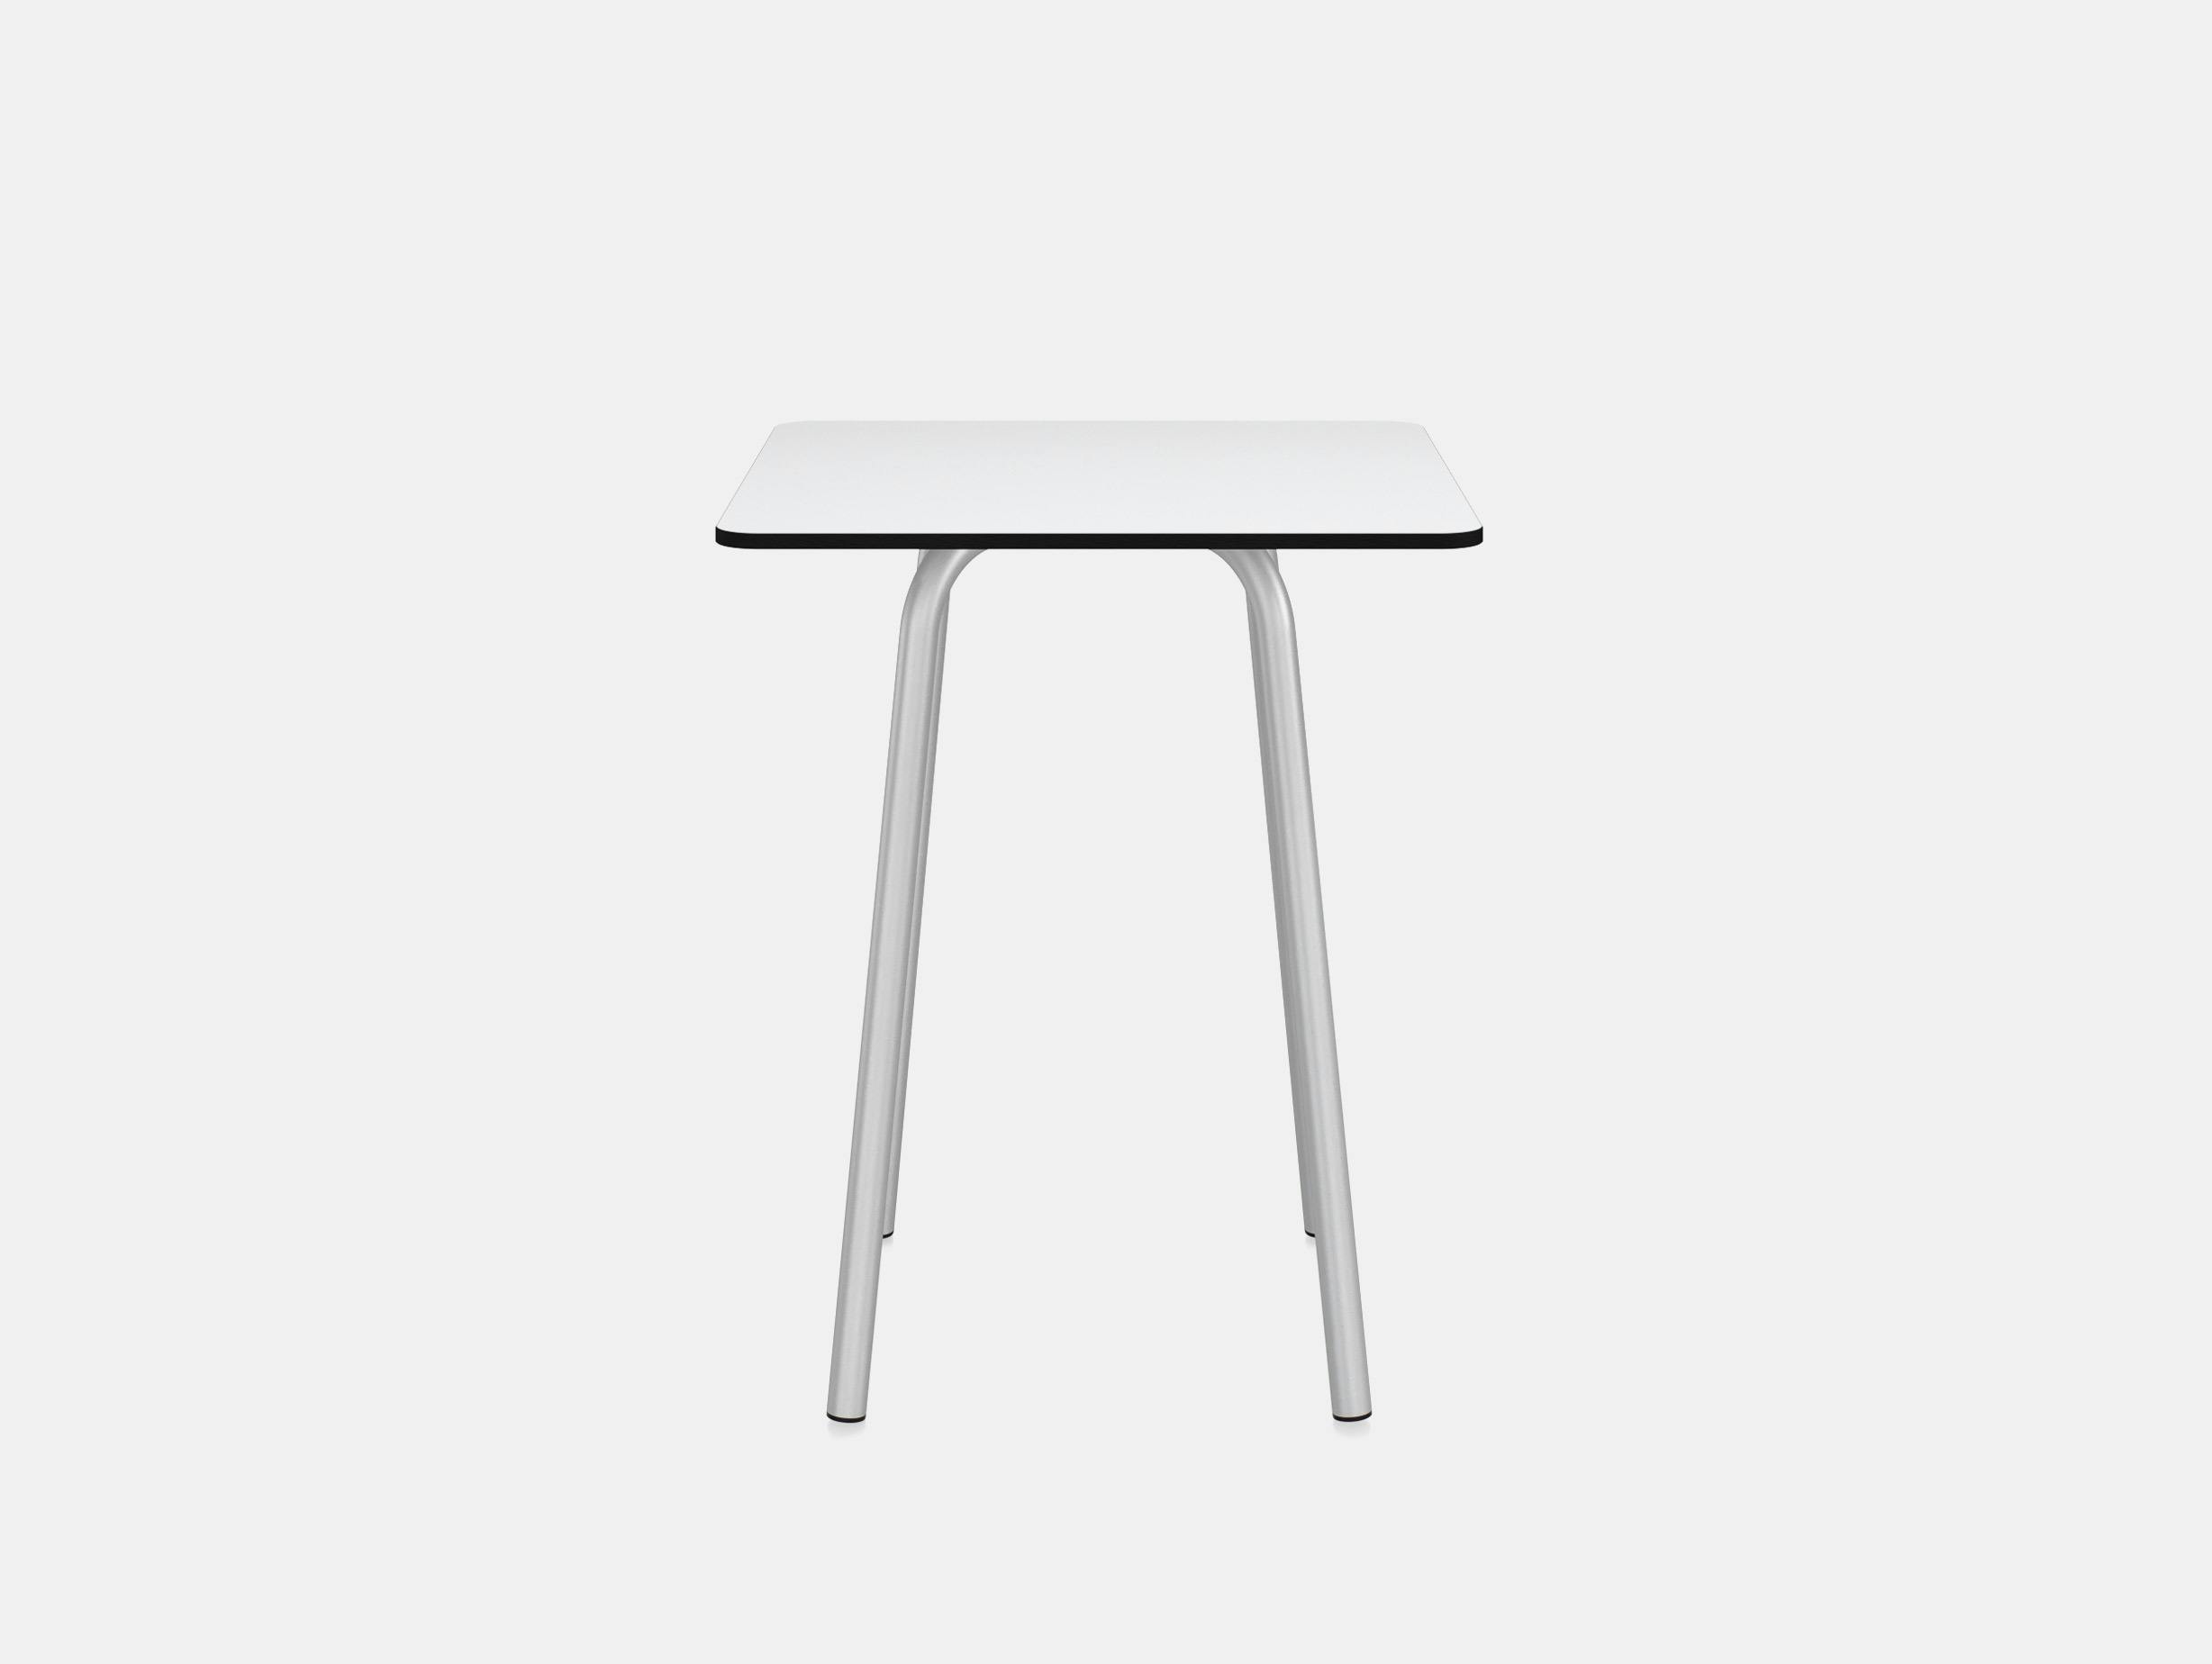 Emeco konstantin grcic parrish cafe table square 60cm aluminium base white hpl top